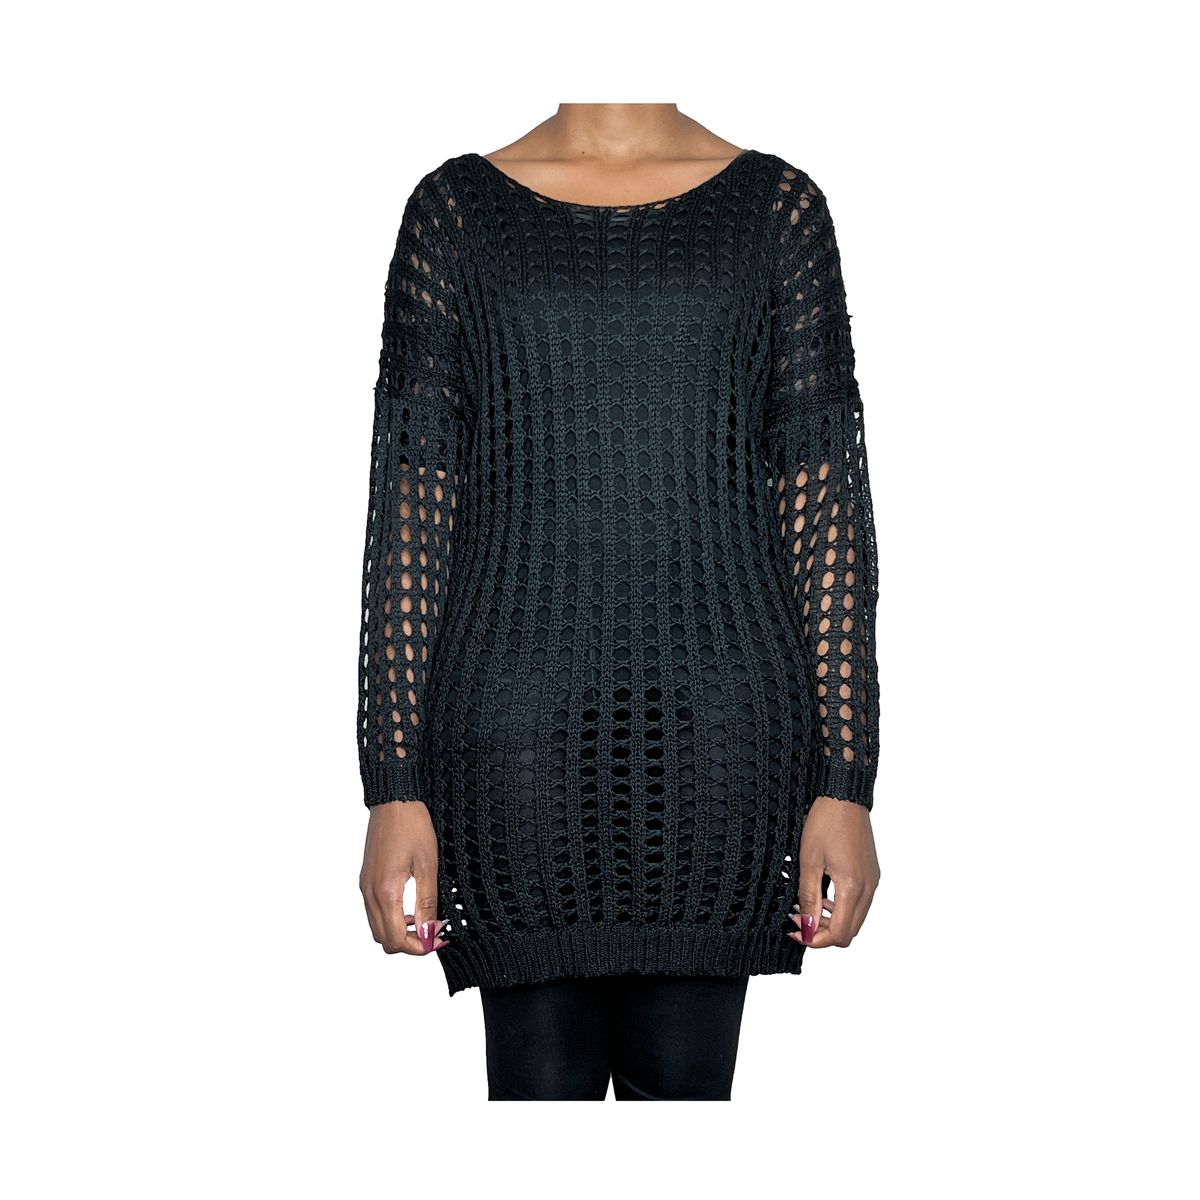 Black Crochet Knit Beach Cover Up Mini Dress | Shop Today. Get it